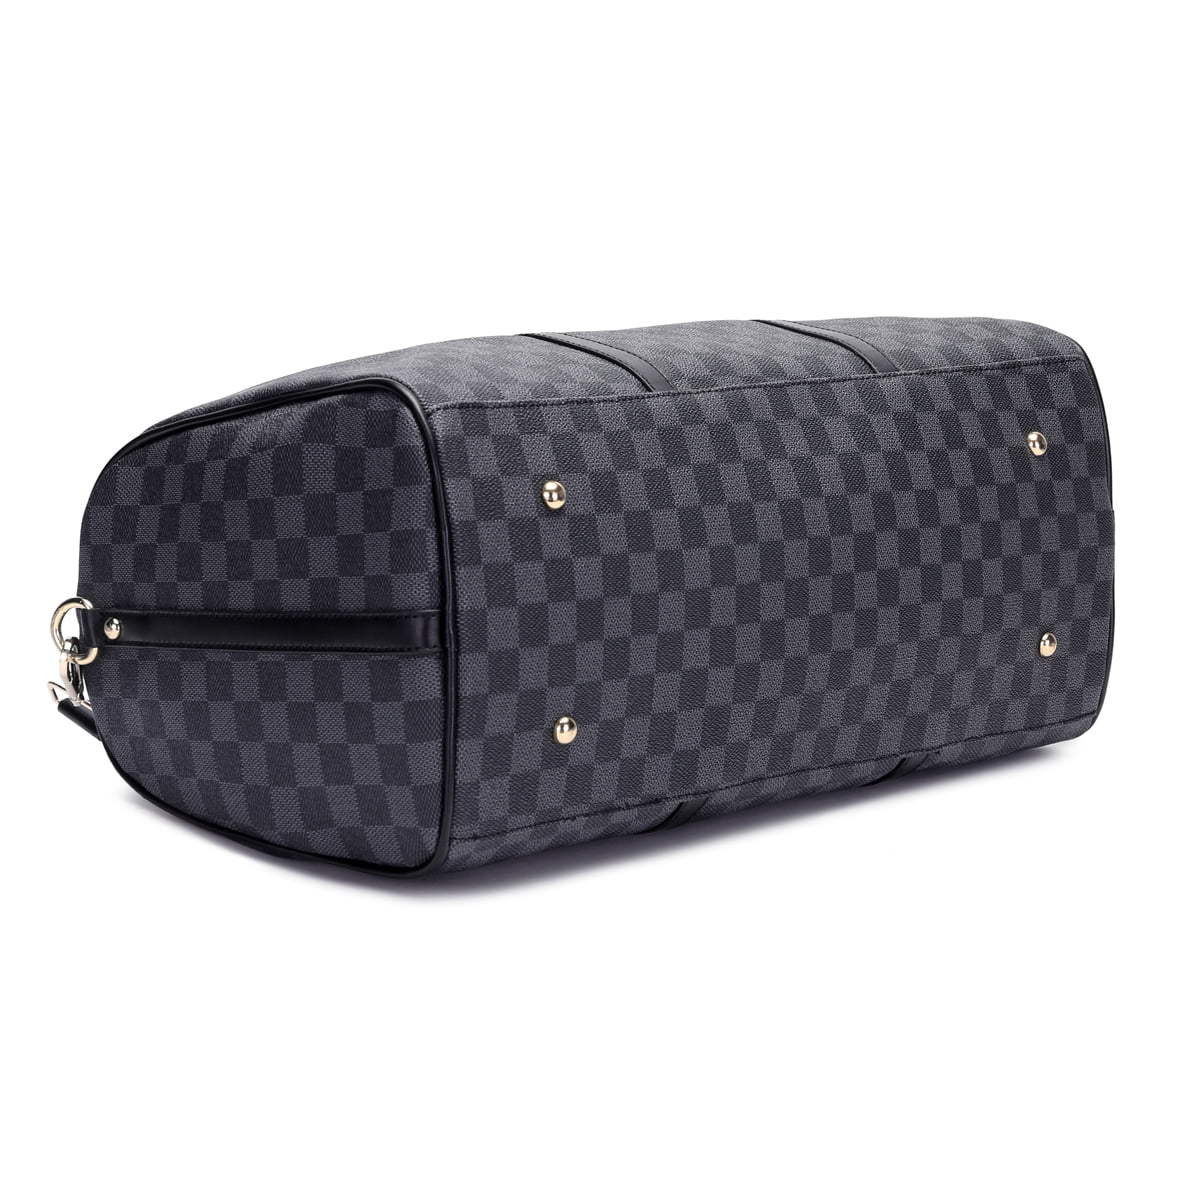 Skearow Checkered Duffle Bag,21L Luggage Bag,Travel Overnight Weekender Bag,PU  Vegan Leather Sport Gym Bag Black Floral Large Size:20.87x10.24x11.02 